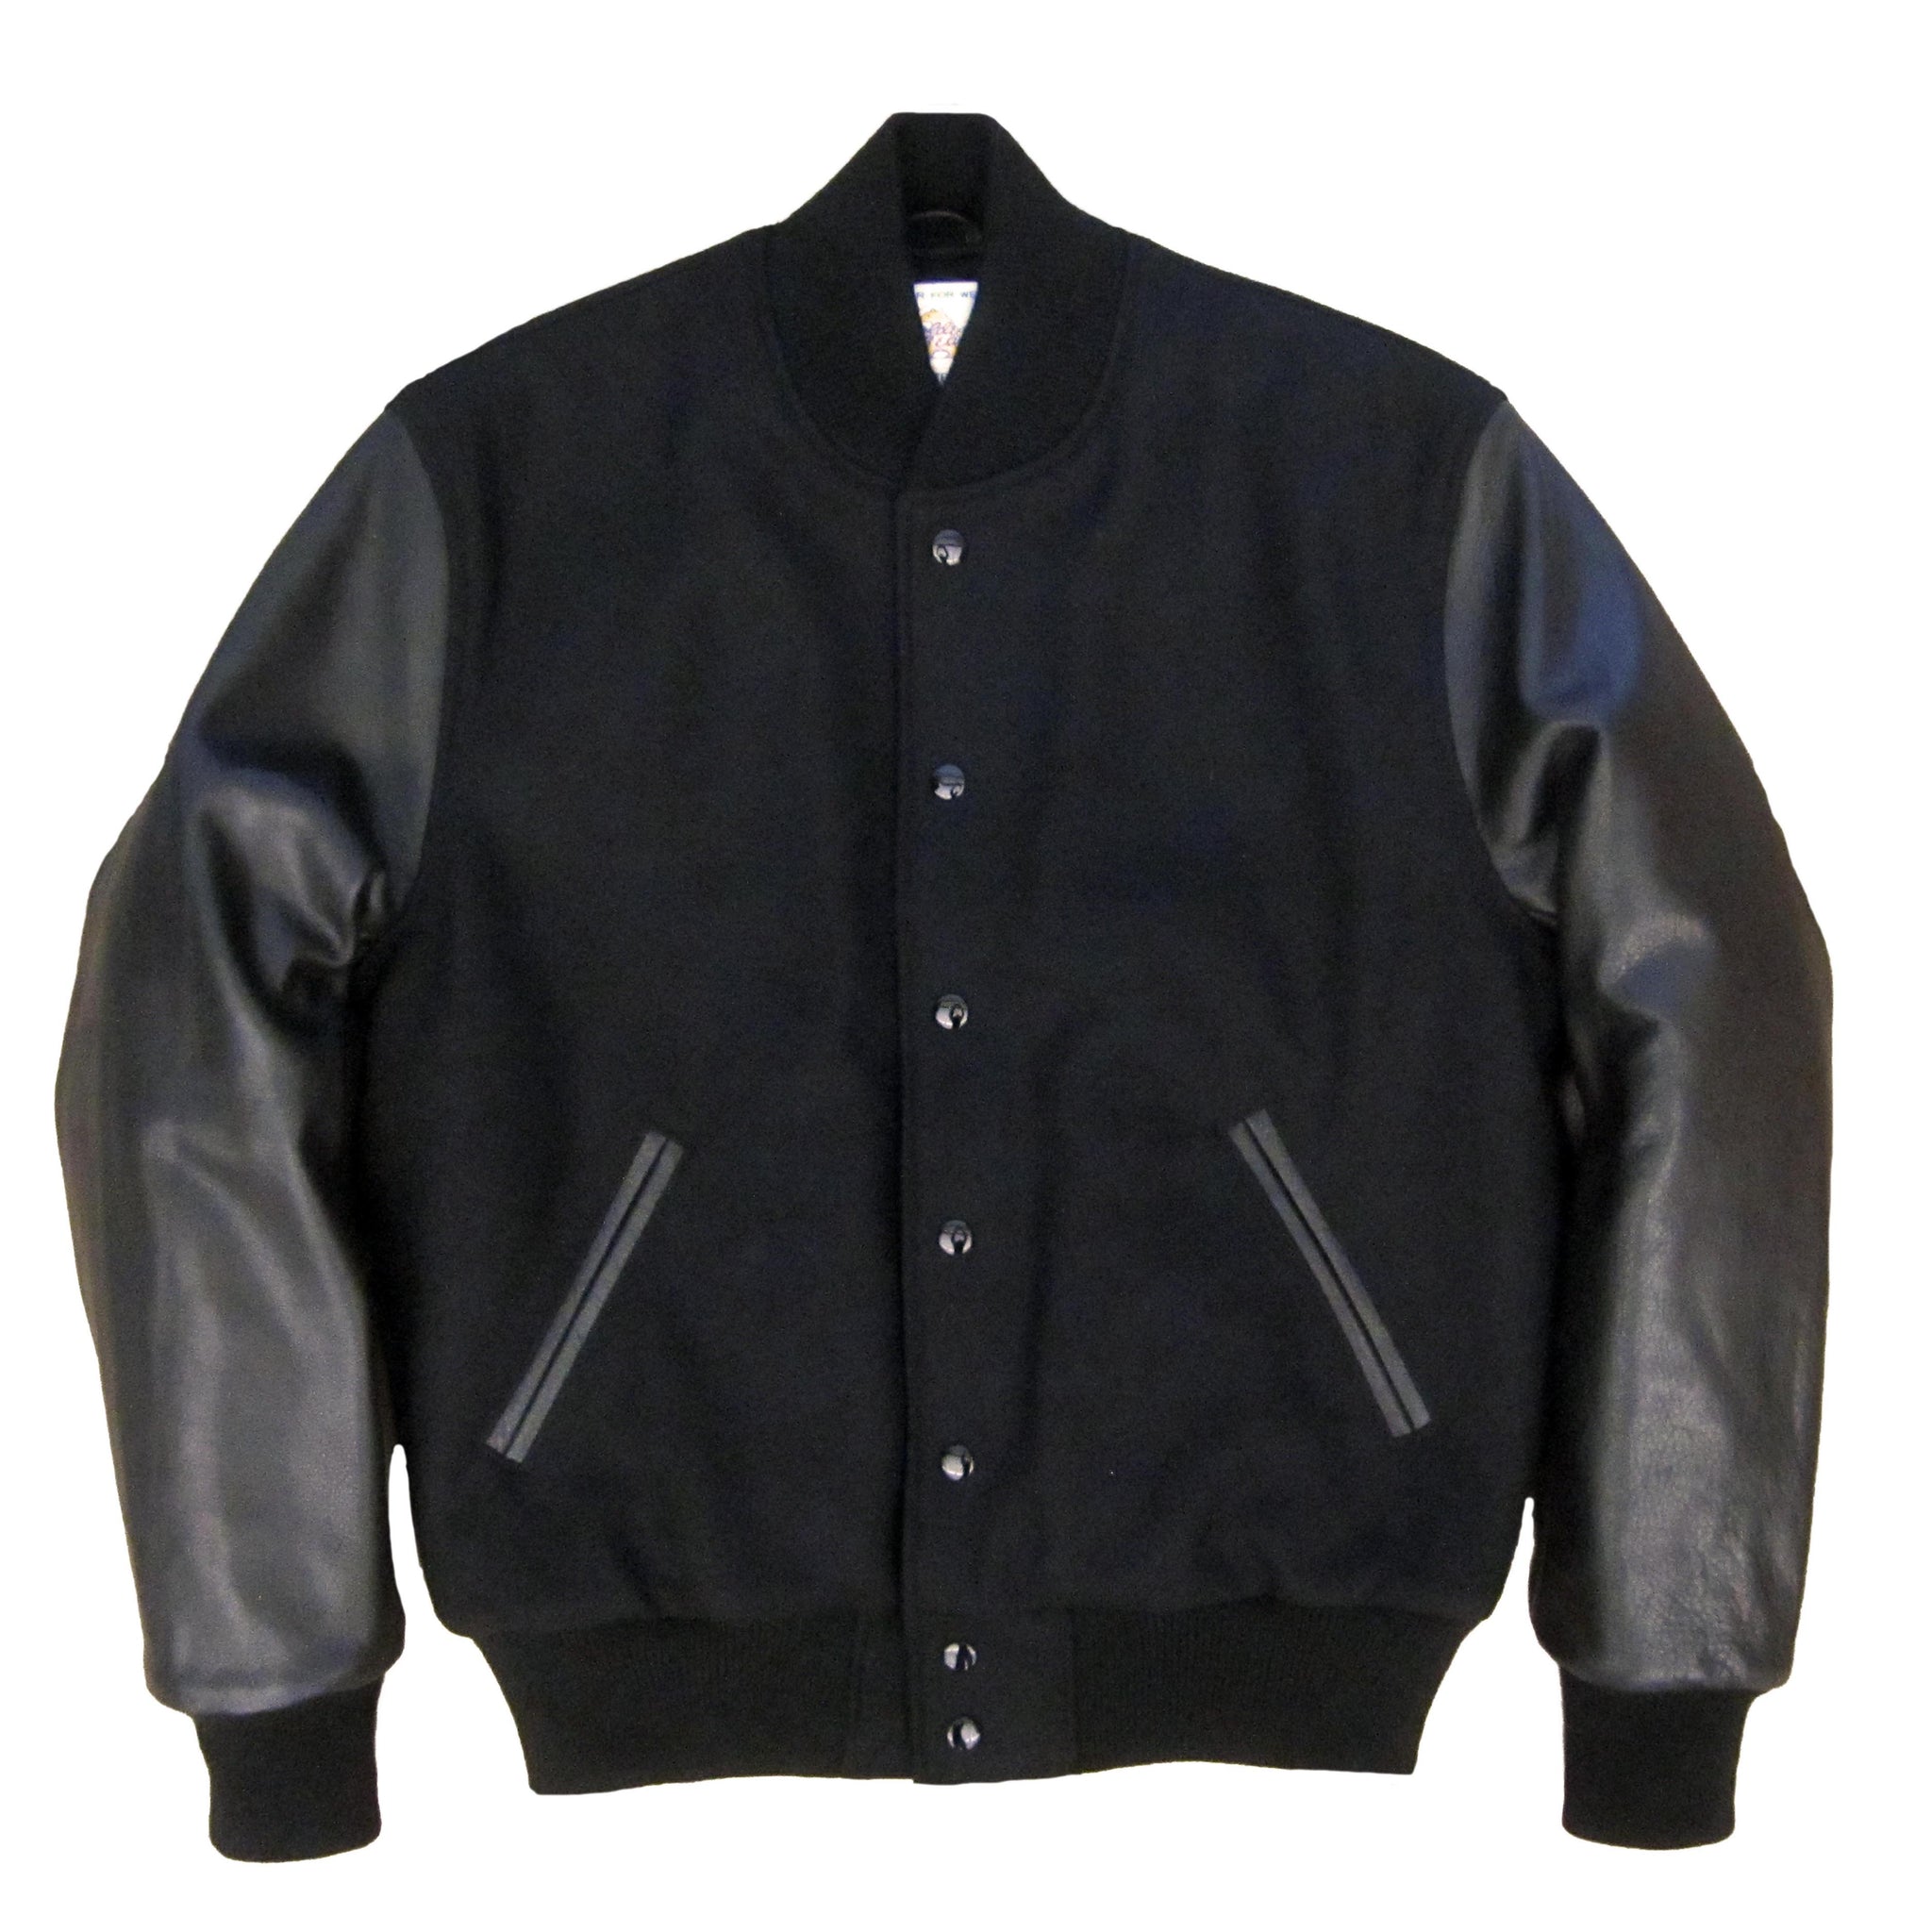 black varsity jacket